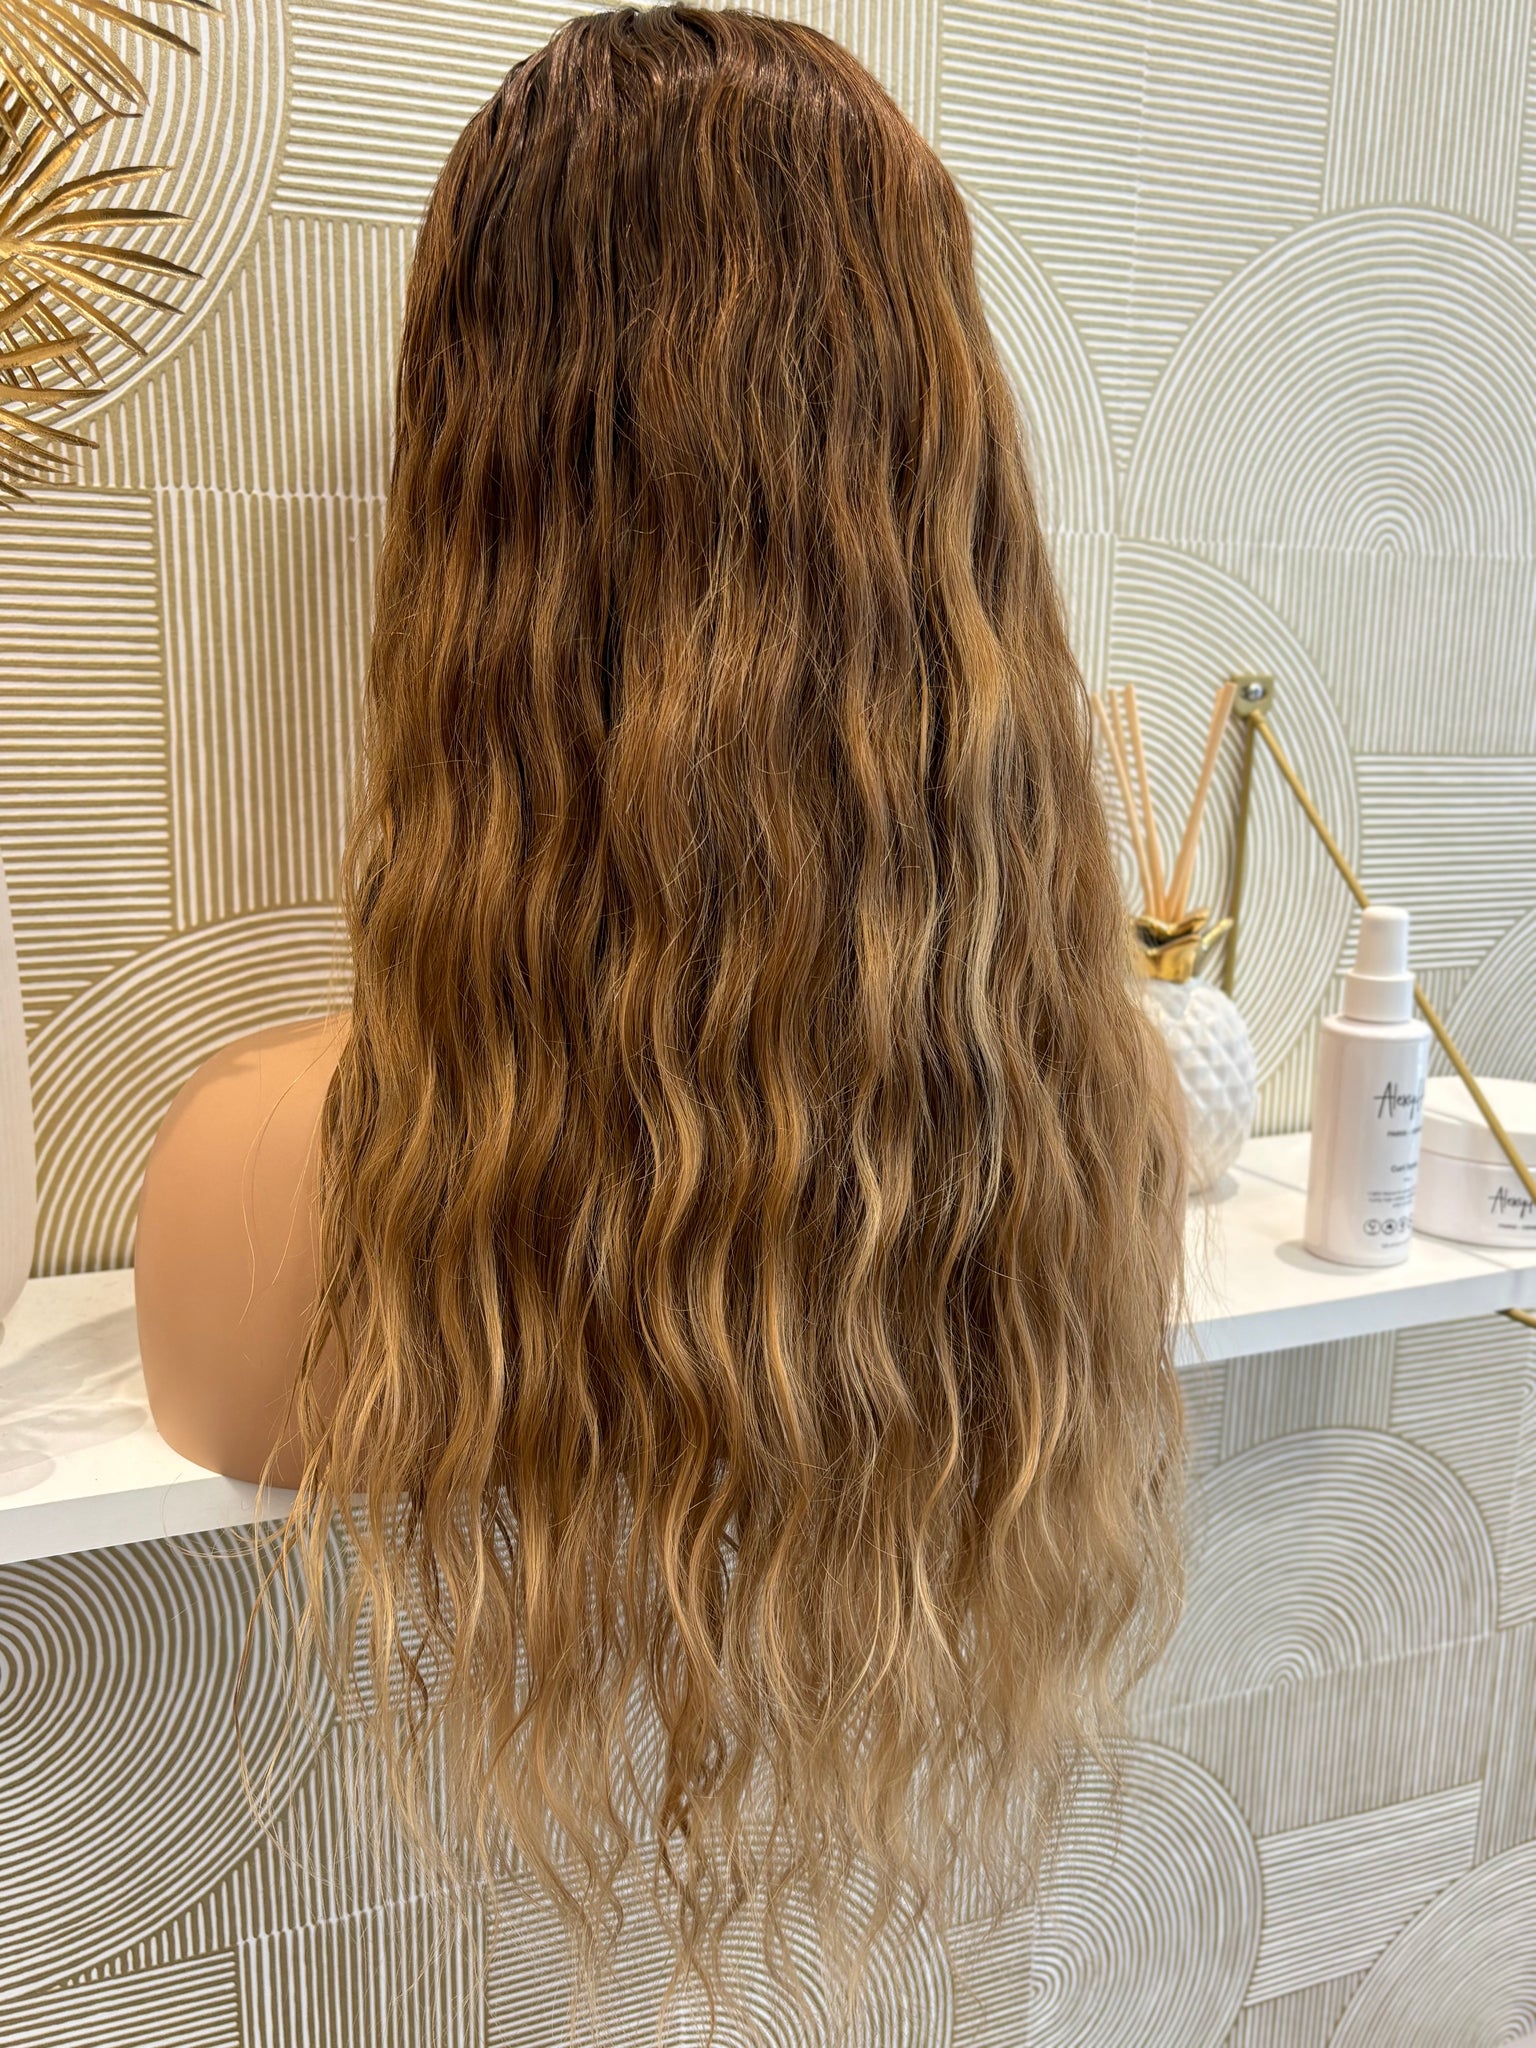 Tania - Integral + lace top  / 22 inch / 150 % Volume / European hair natural wavy